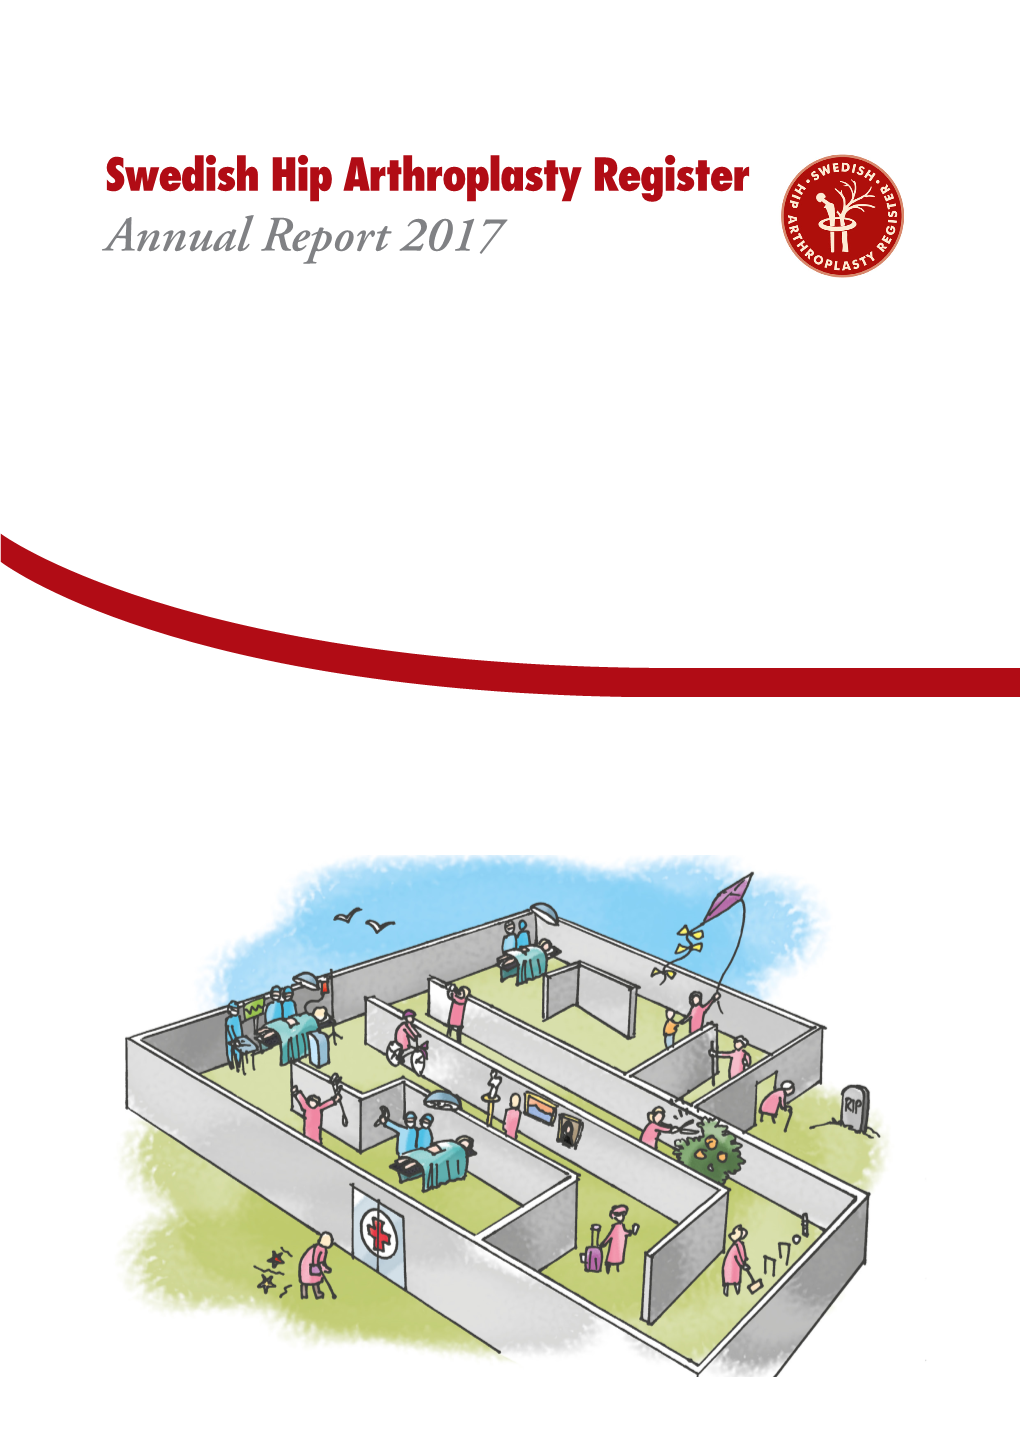 The Swedish Hip Arthroplasty Register Annual Report 2017